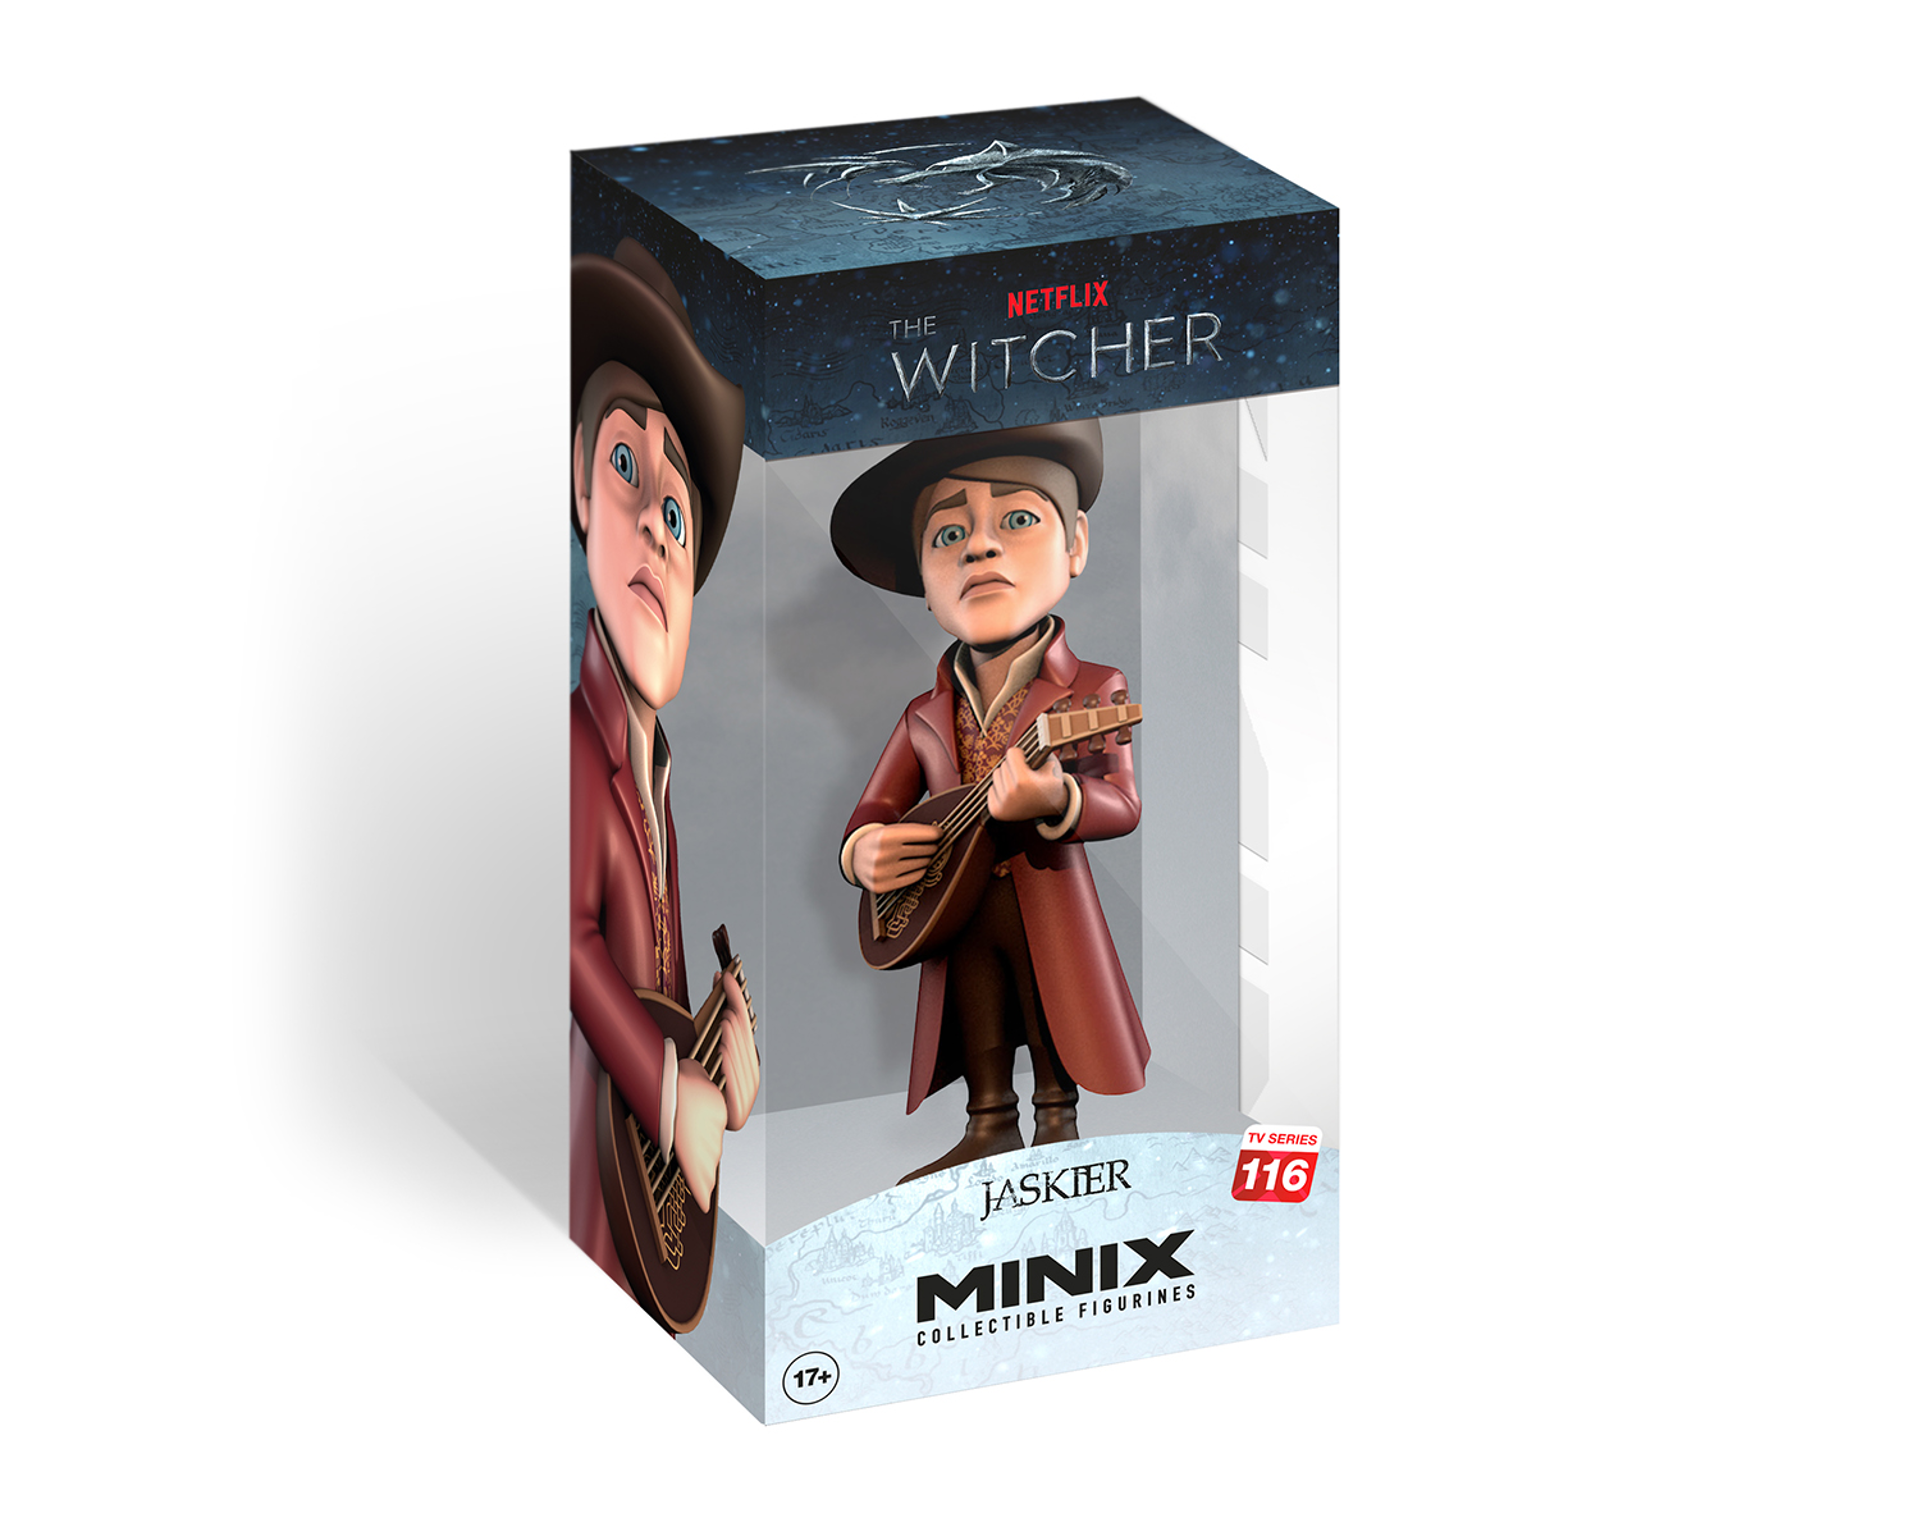 Minix - TV Series #116 - Figurine PVC 12 cm - The Witcher - Jaskier